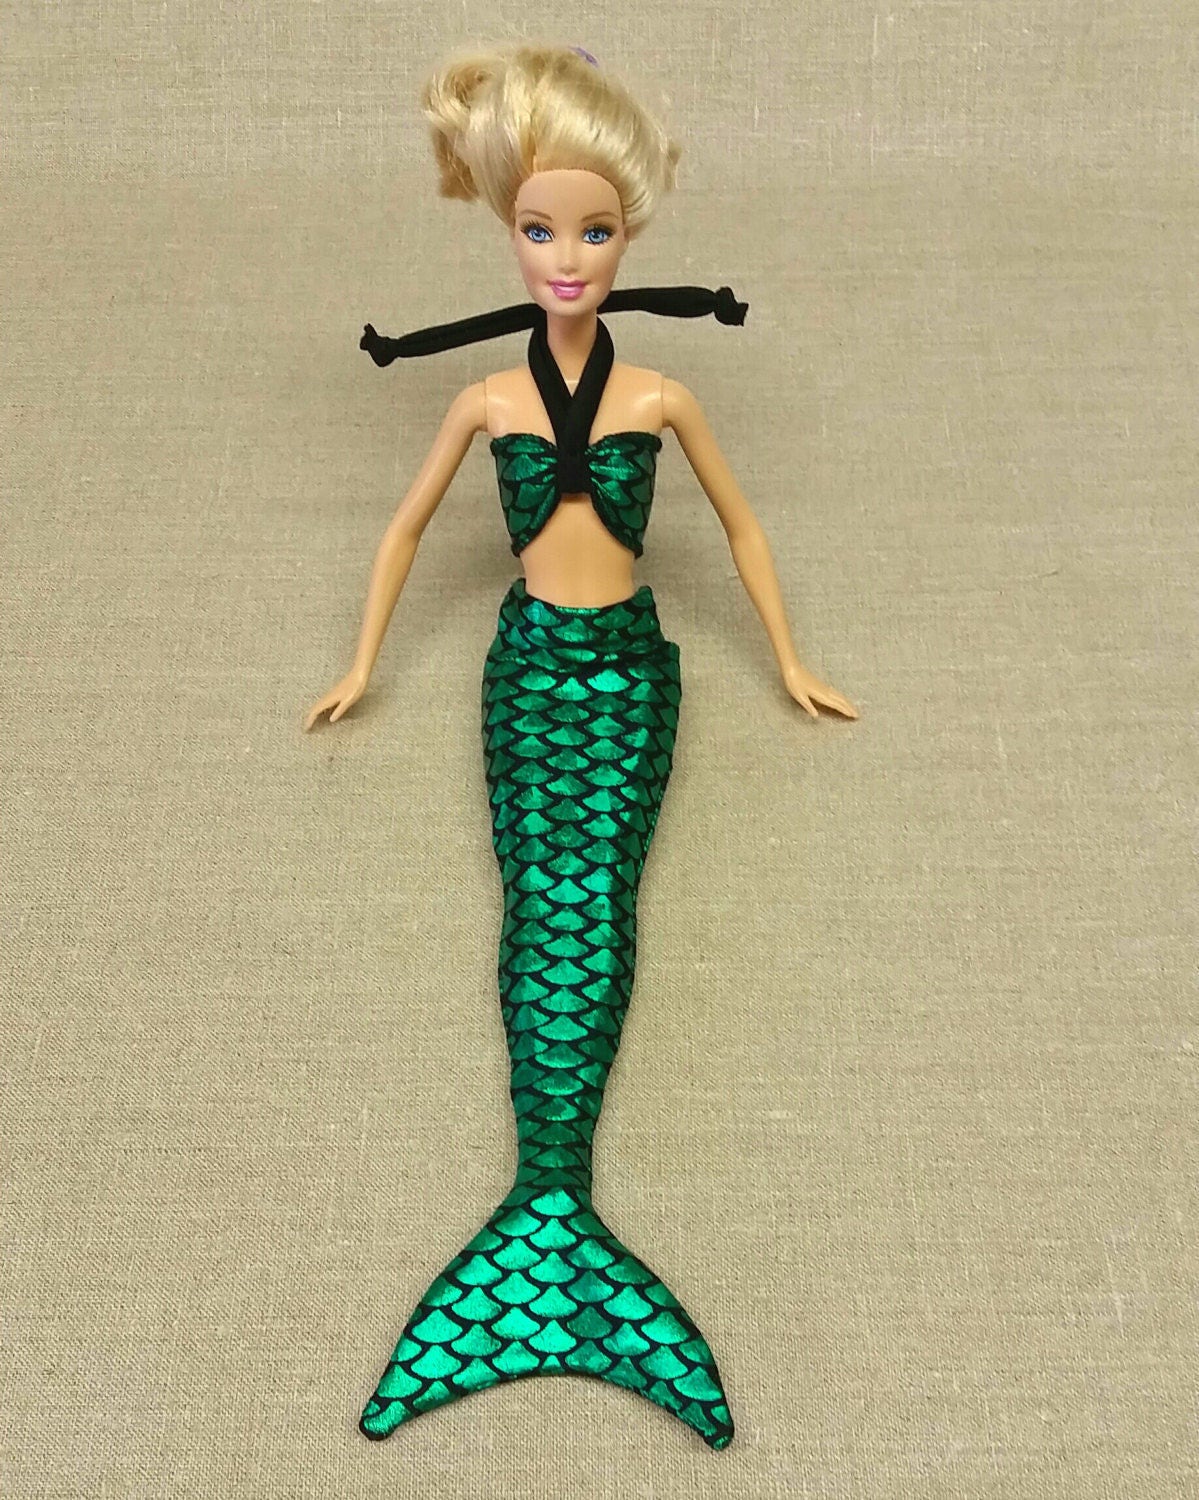 Mermaid Tail and Top Set for 12 Fashion Dolls Green Metallic Fish